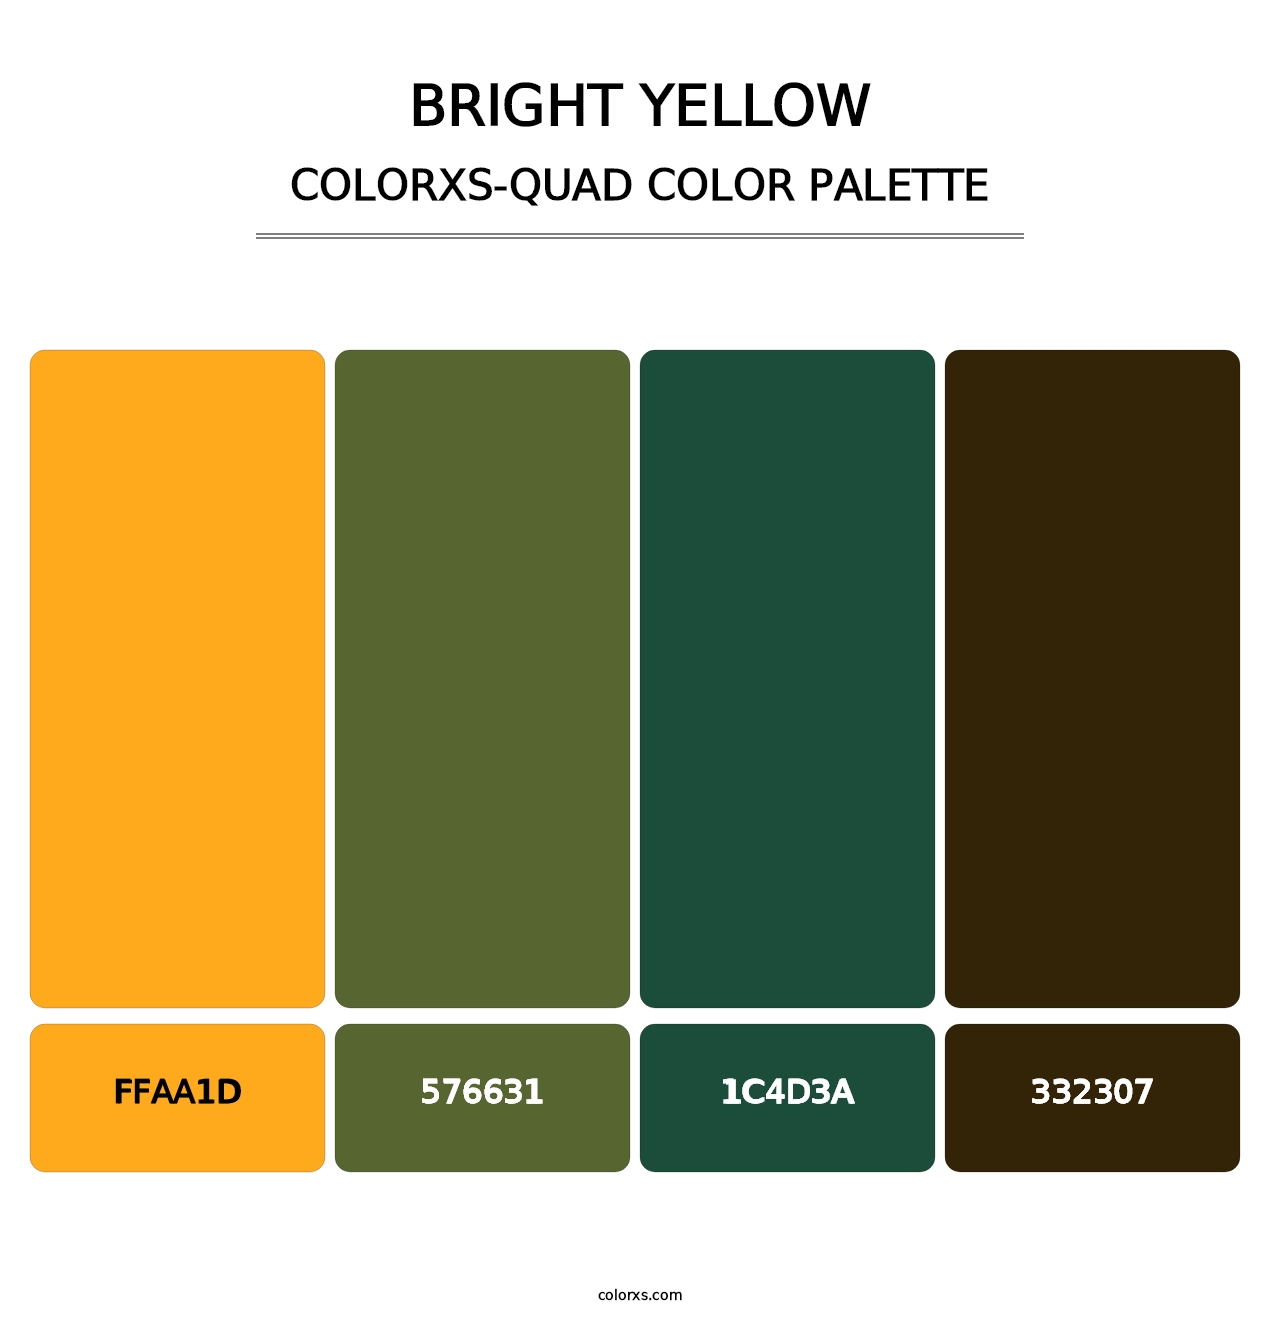 Bright Yellow - Colorxs Quad Palette